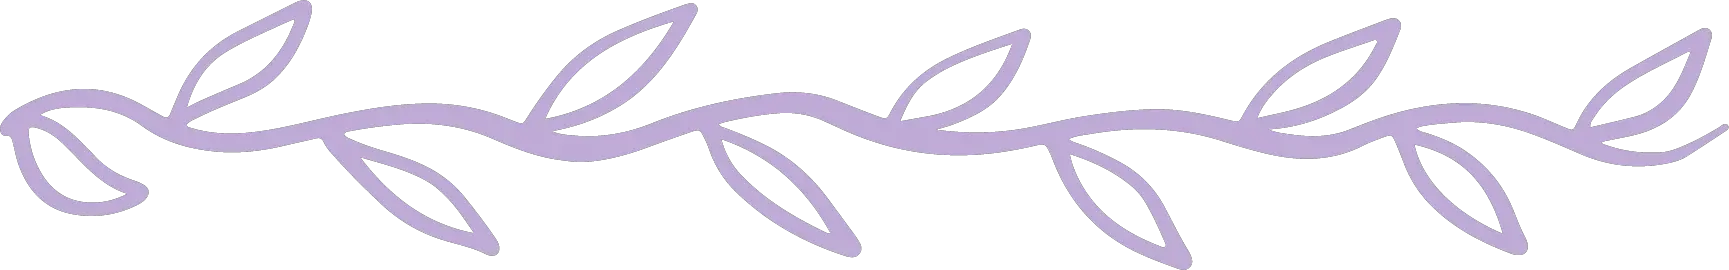 divider purple